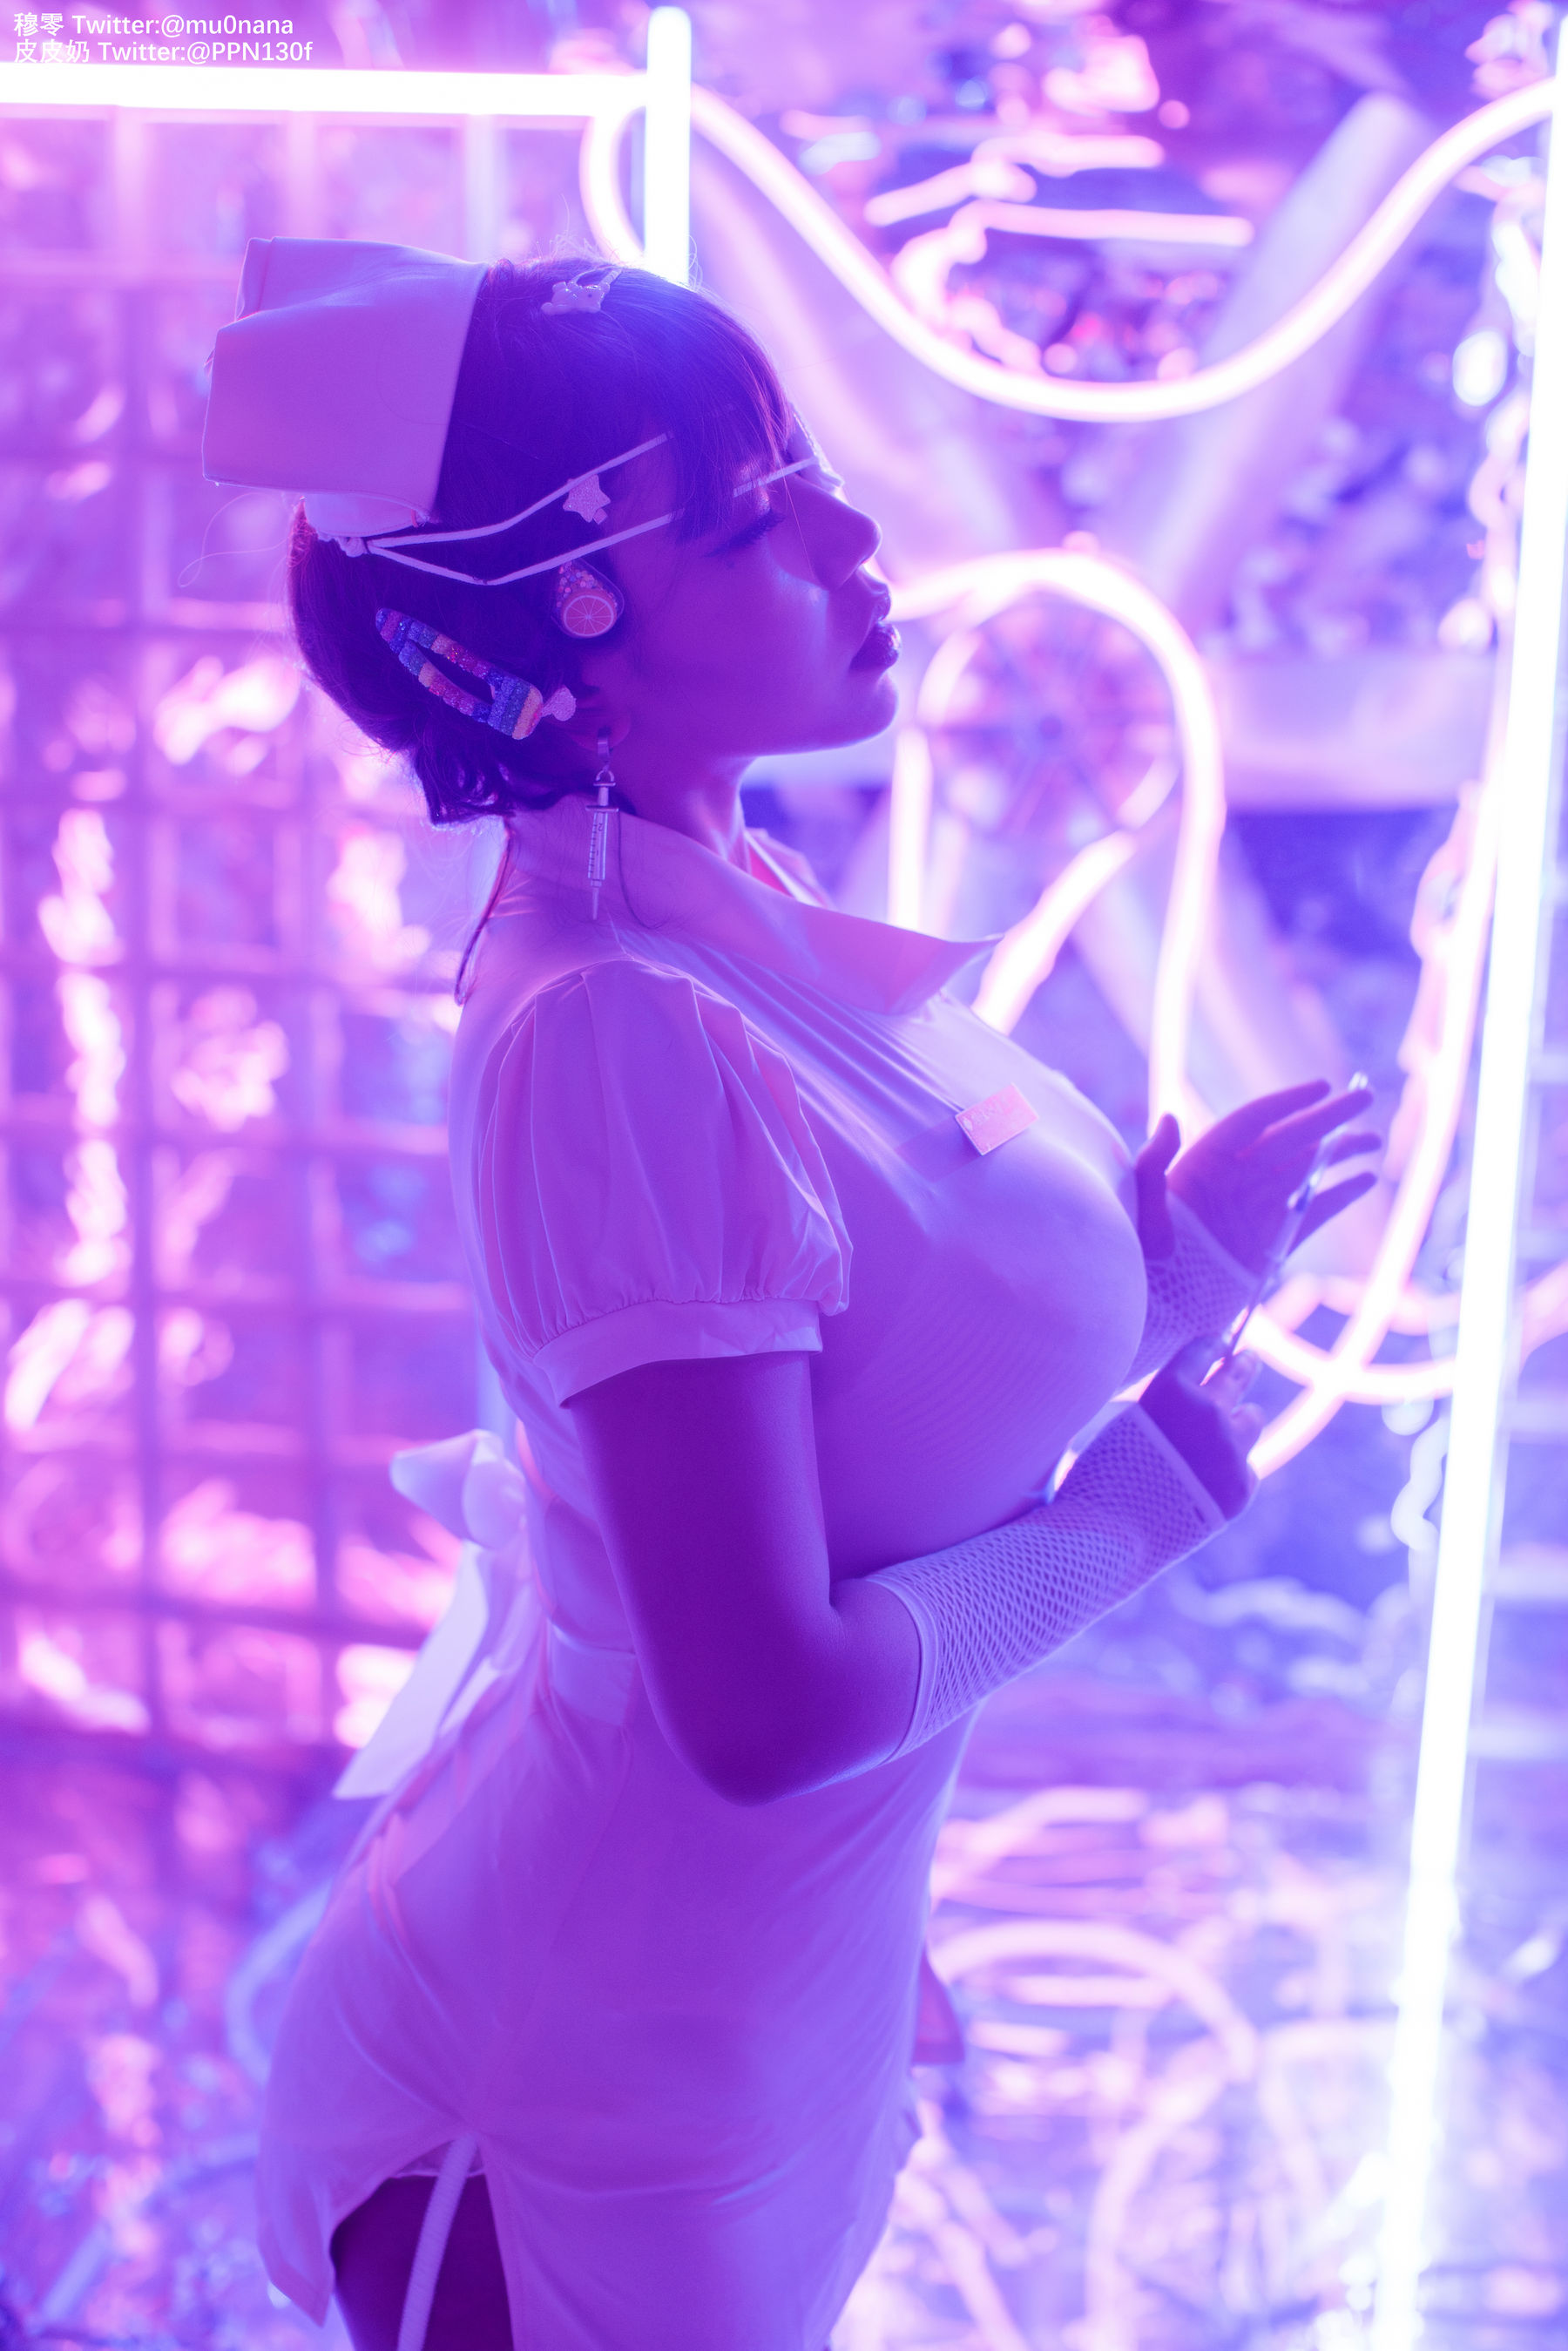 [Cosplay写真] 皮皮奶可可爱了啦 - 万圣节邪恶护士